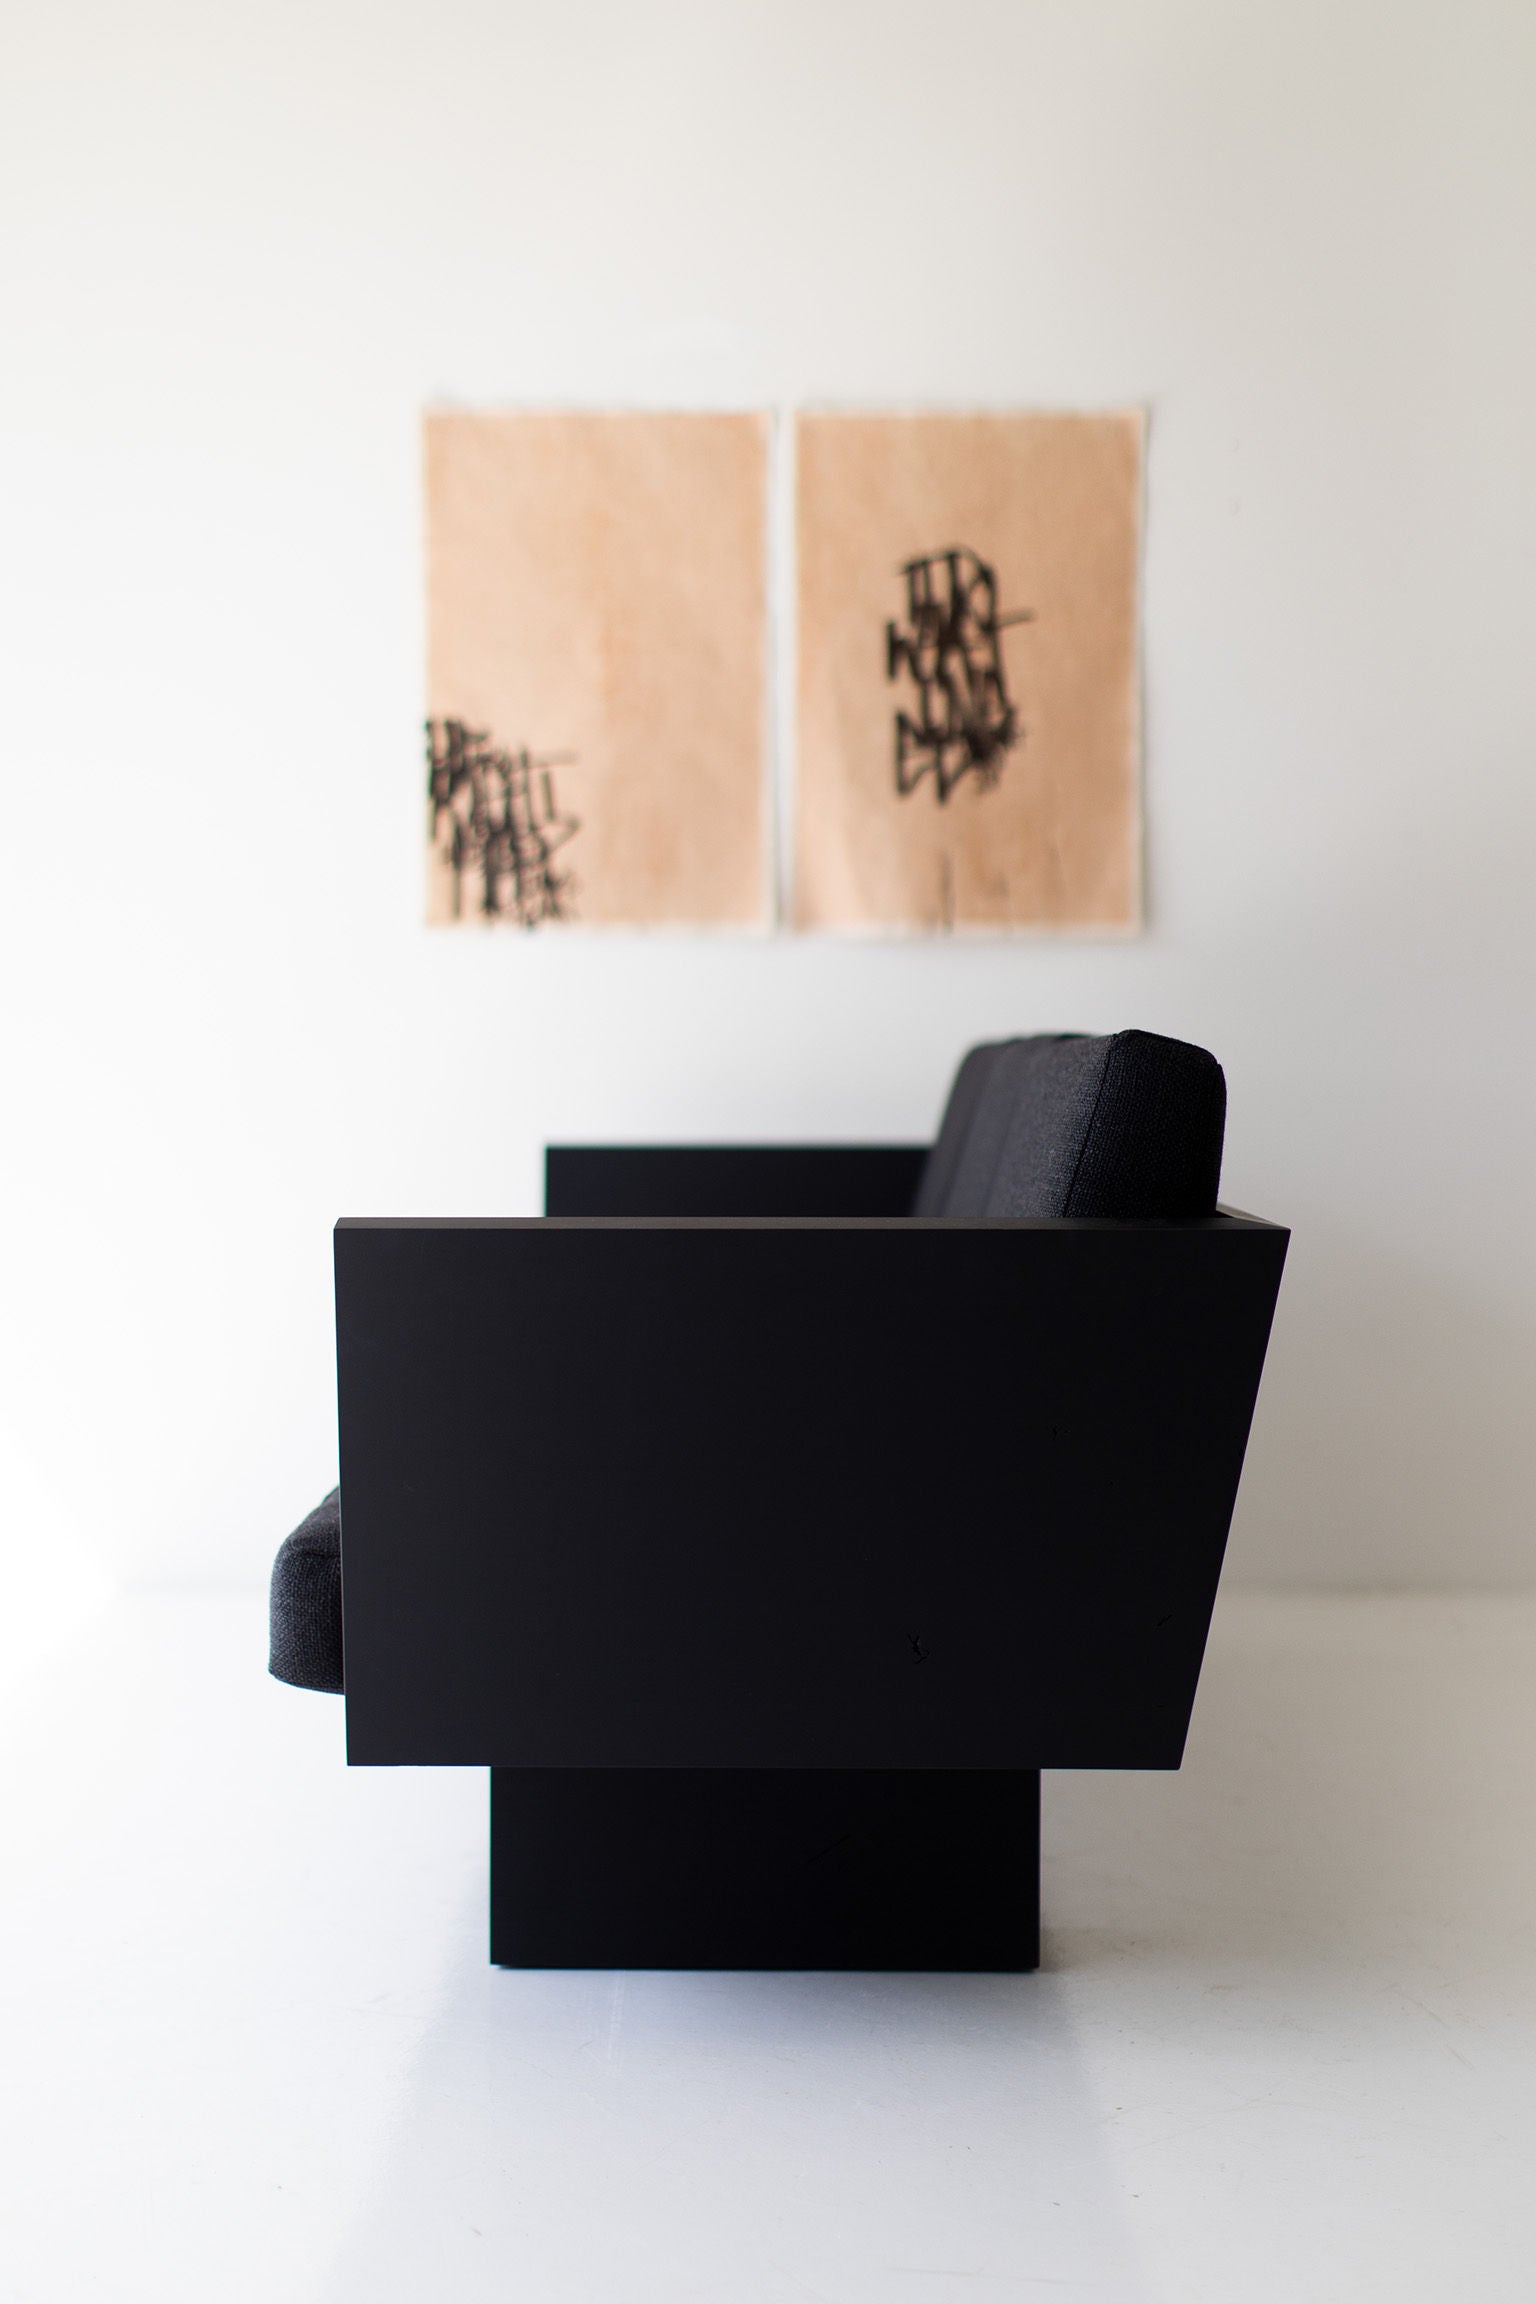 Suelo Modern Black Sofa - 1020